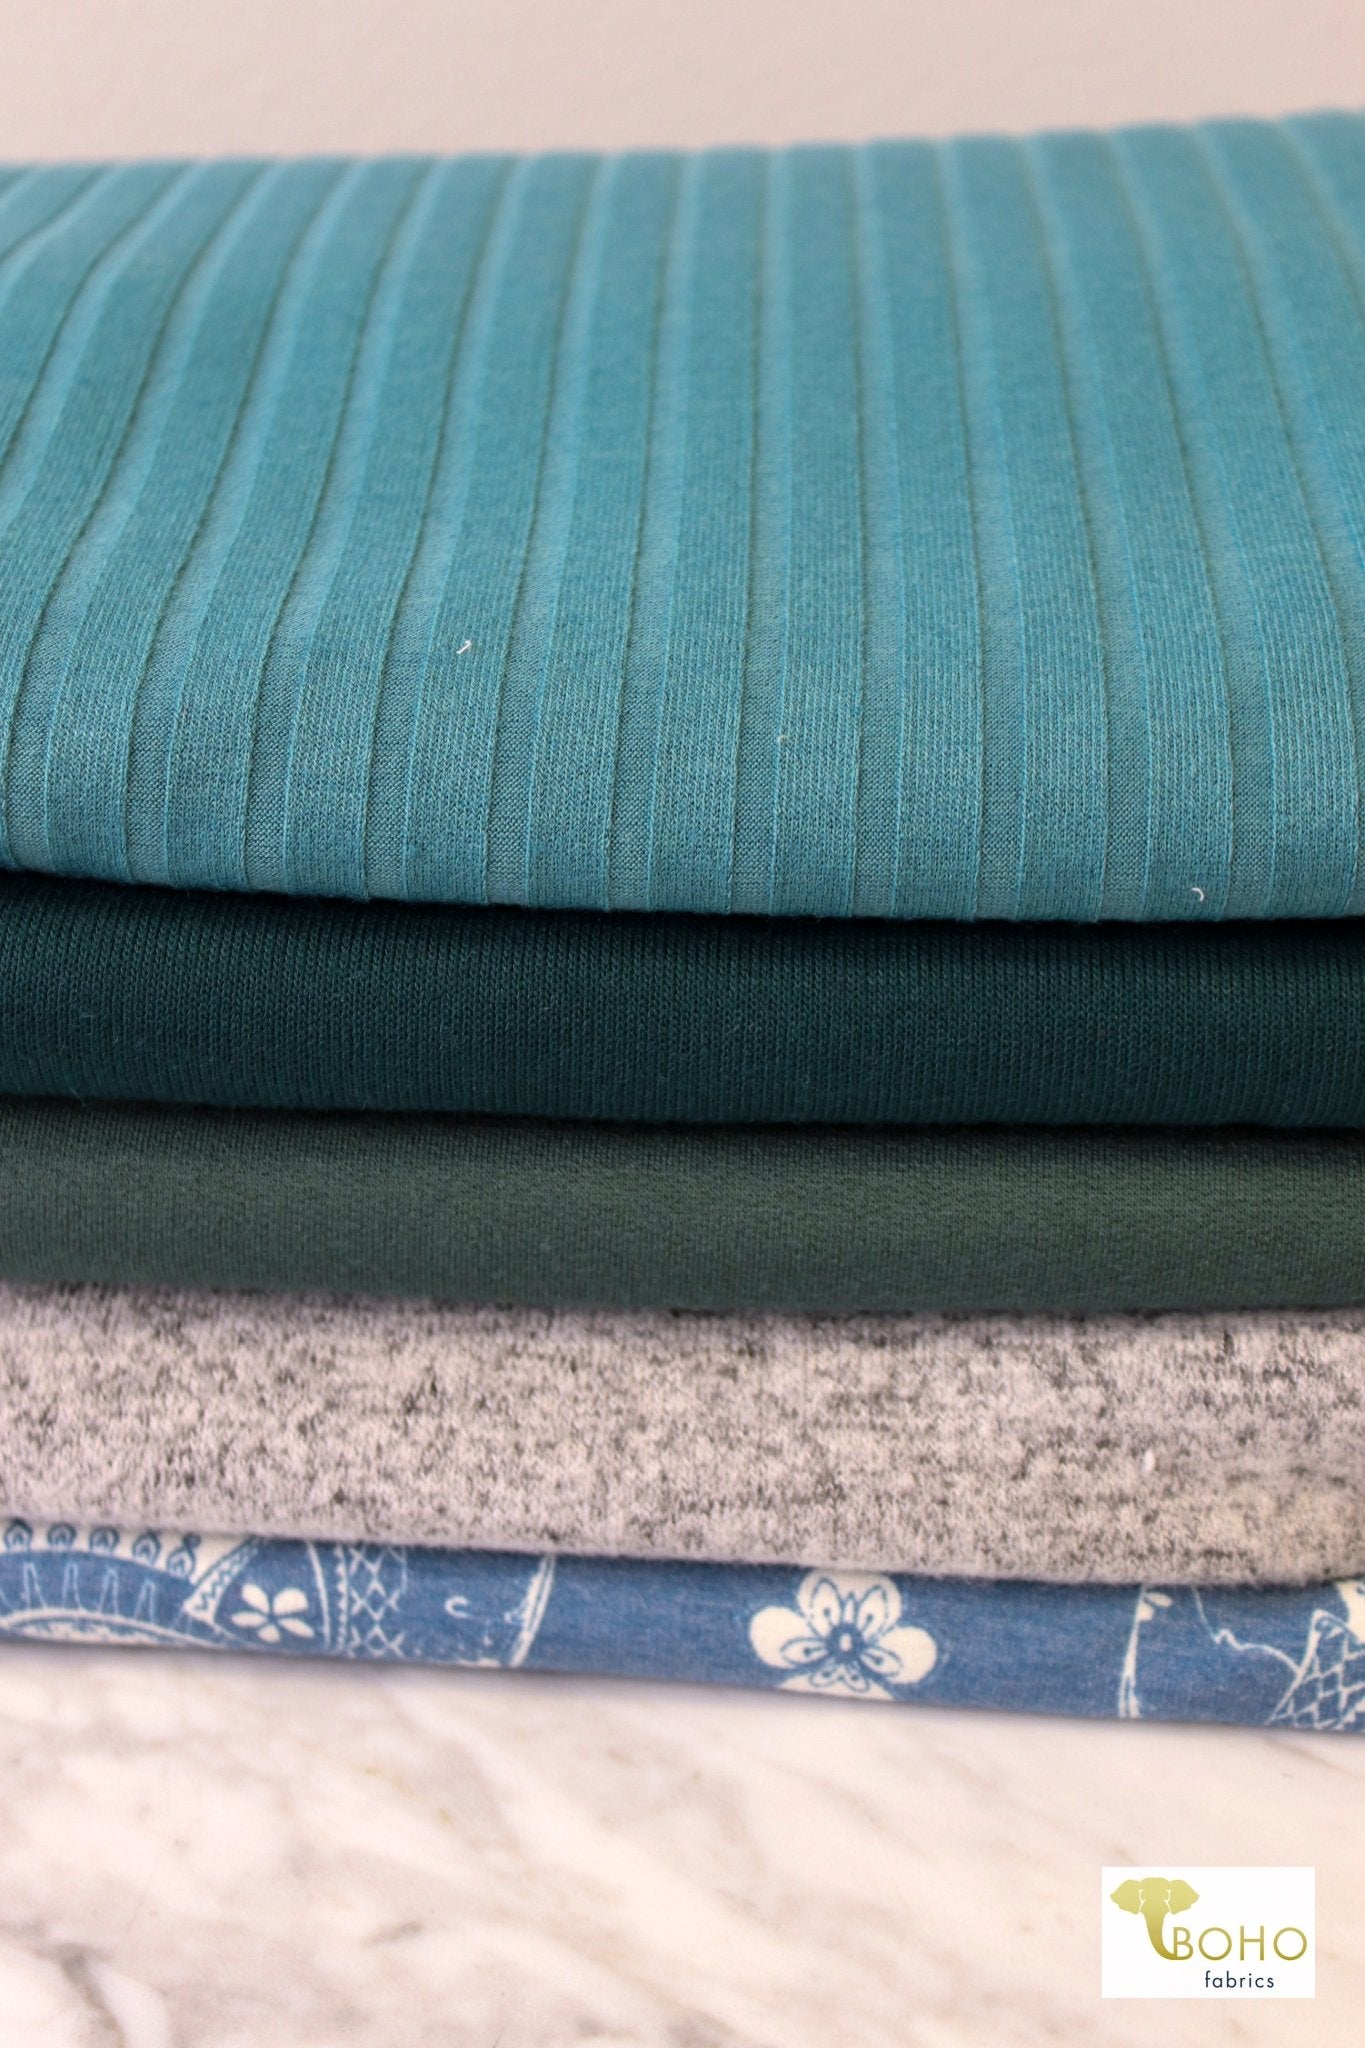 "Winter Waves" Sweater/FT Knit Palette Bundle - Boho Fabrics